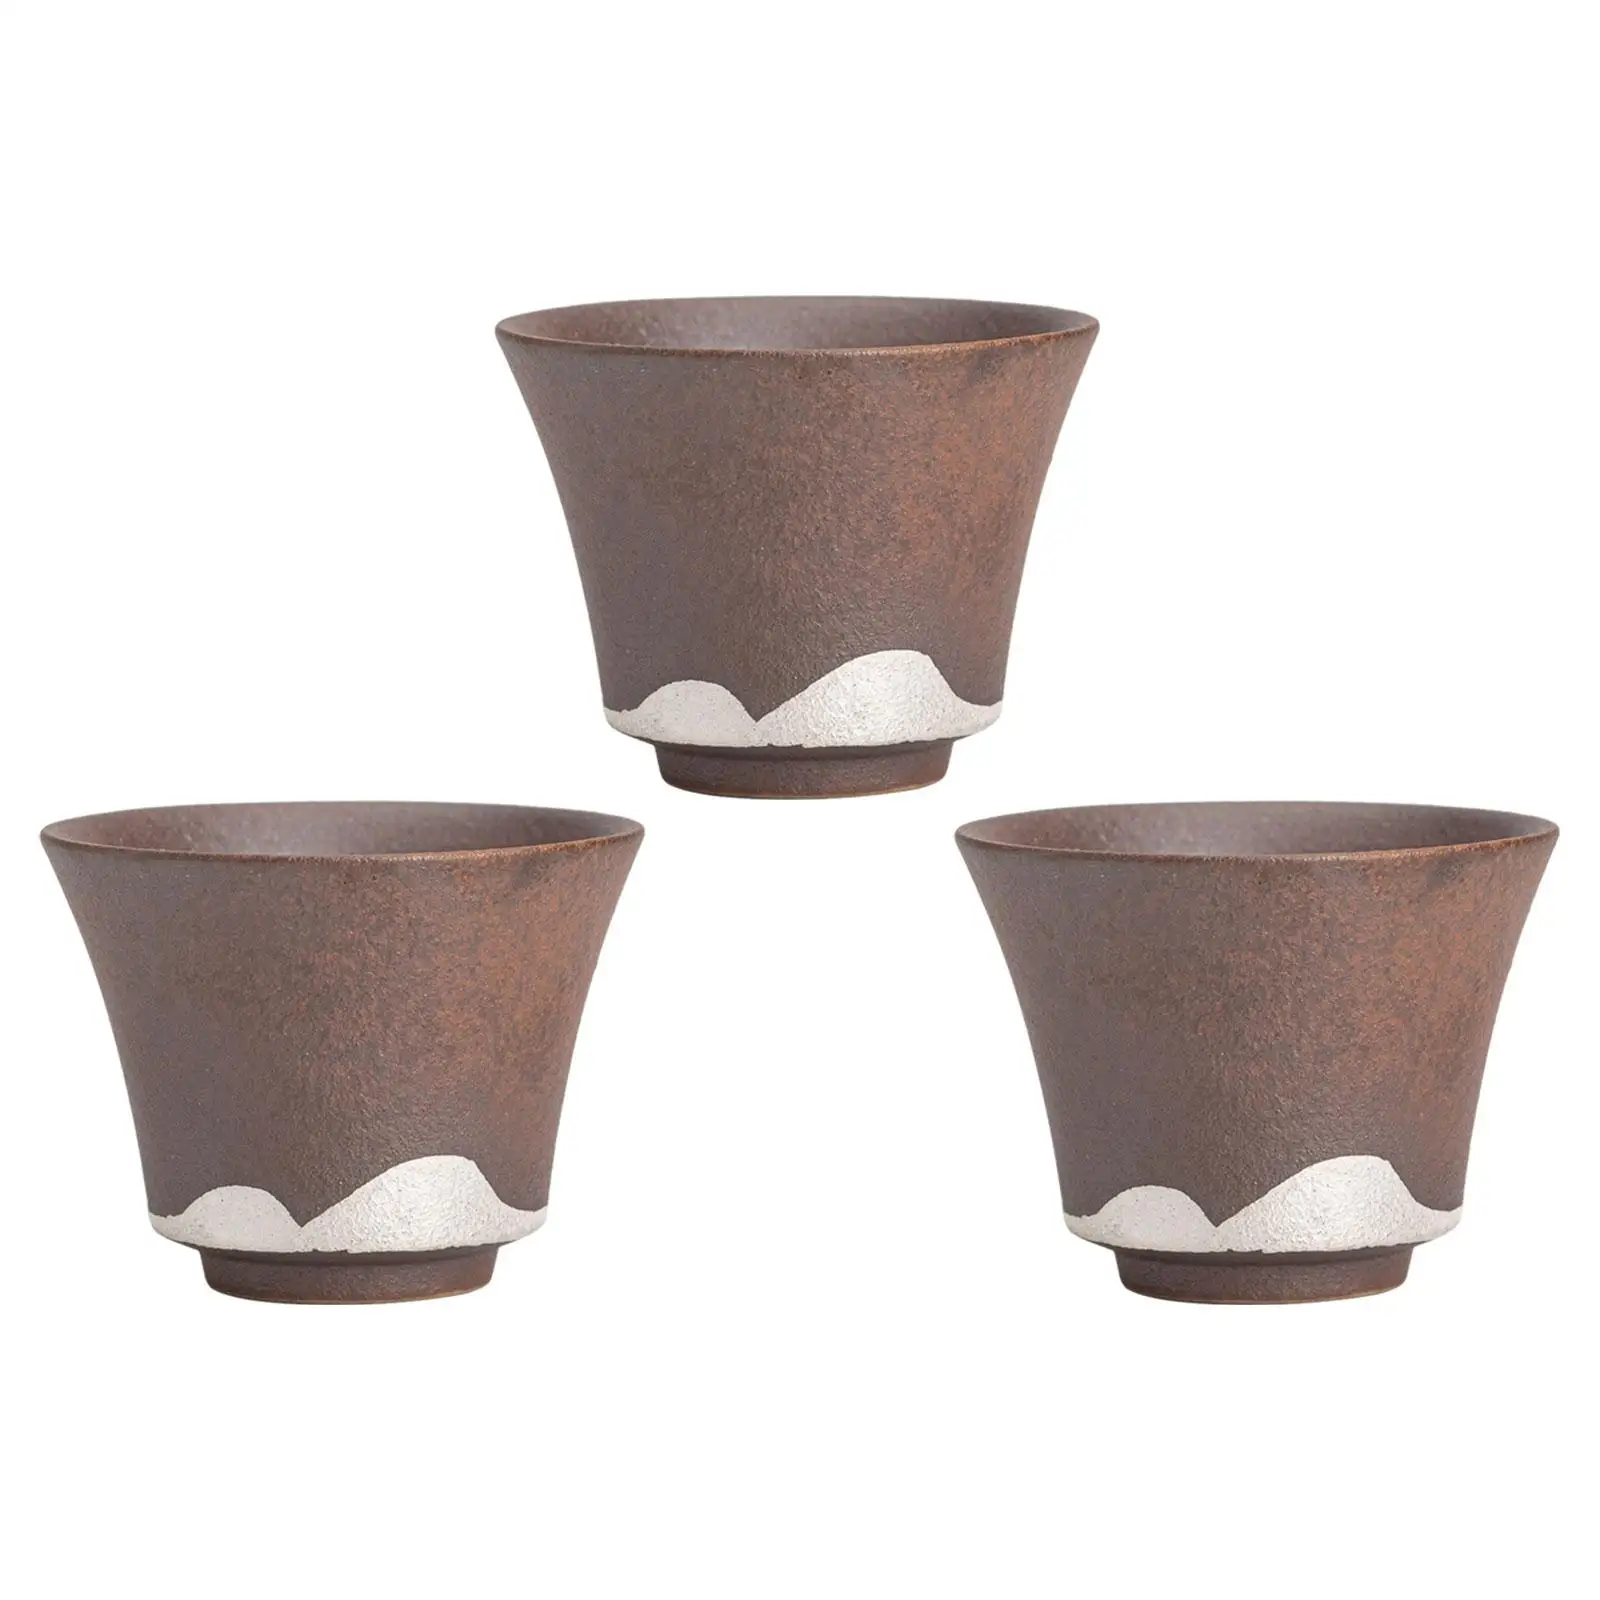 3Pcs Teacup Set Ceramic Teapot Kiln Change Drinkware without Handles Tea Mug for Tea House Hiking Tea Lovers Gift Home Hotel